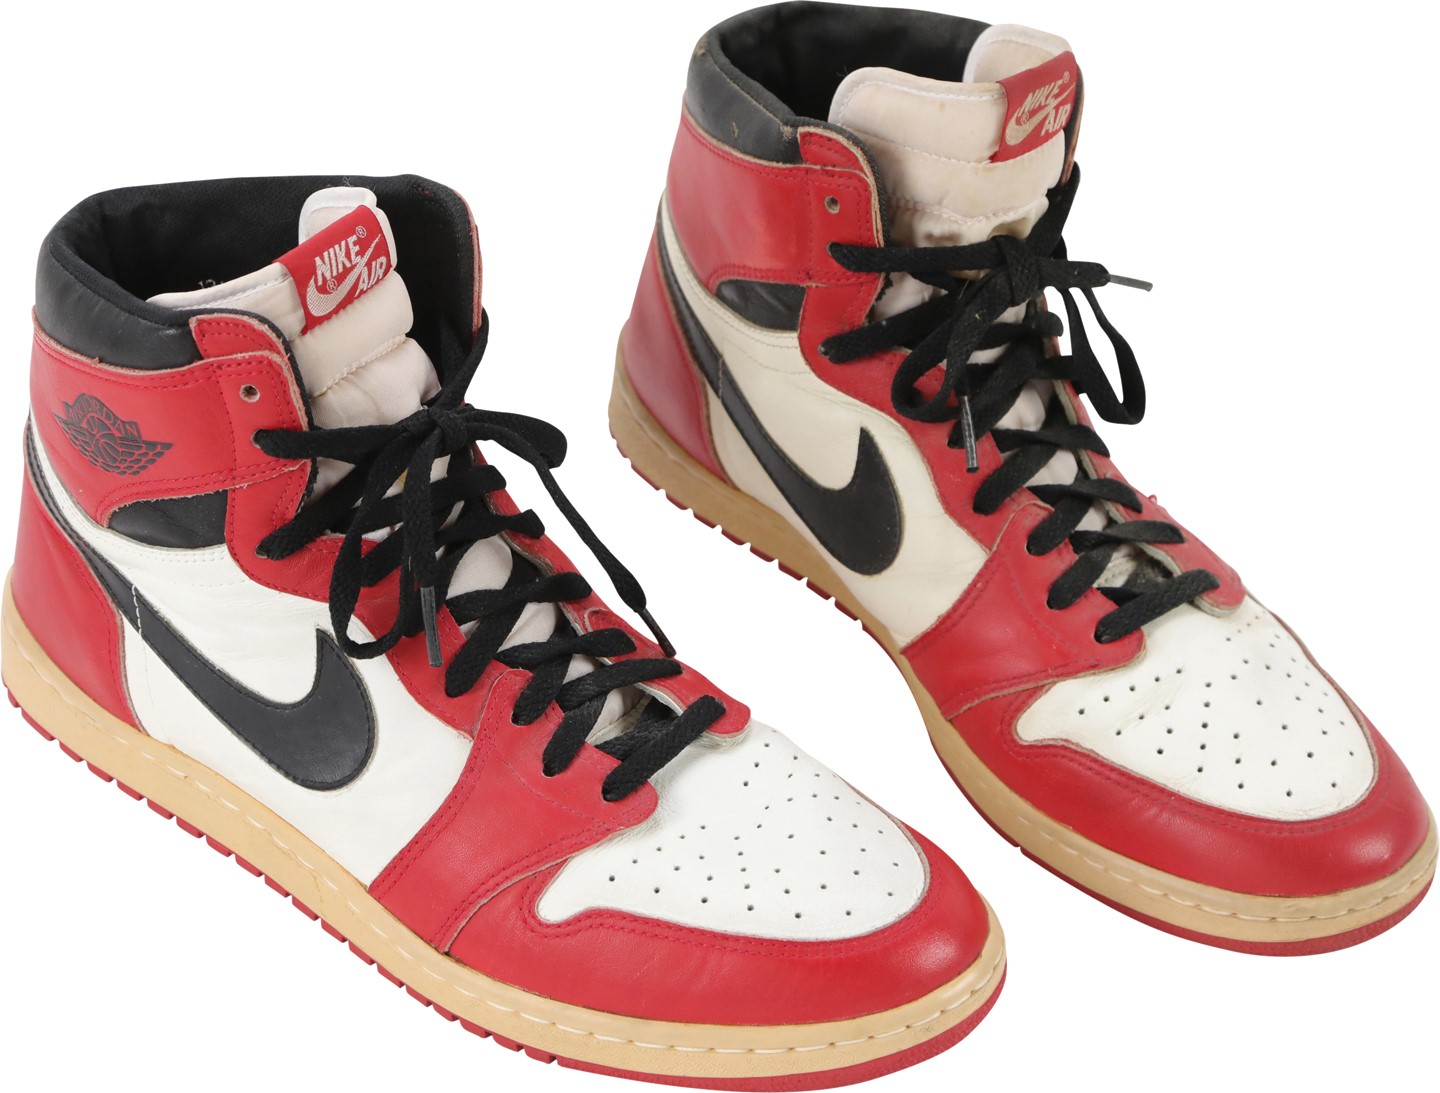 - 85 Michael Jordan Chicago Bulls Game Worn Air Jordan I Rookie Era Sneakers from Judge Cafe Collection (MEARS)